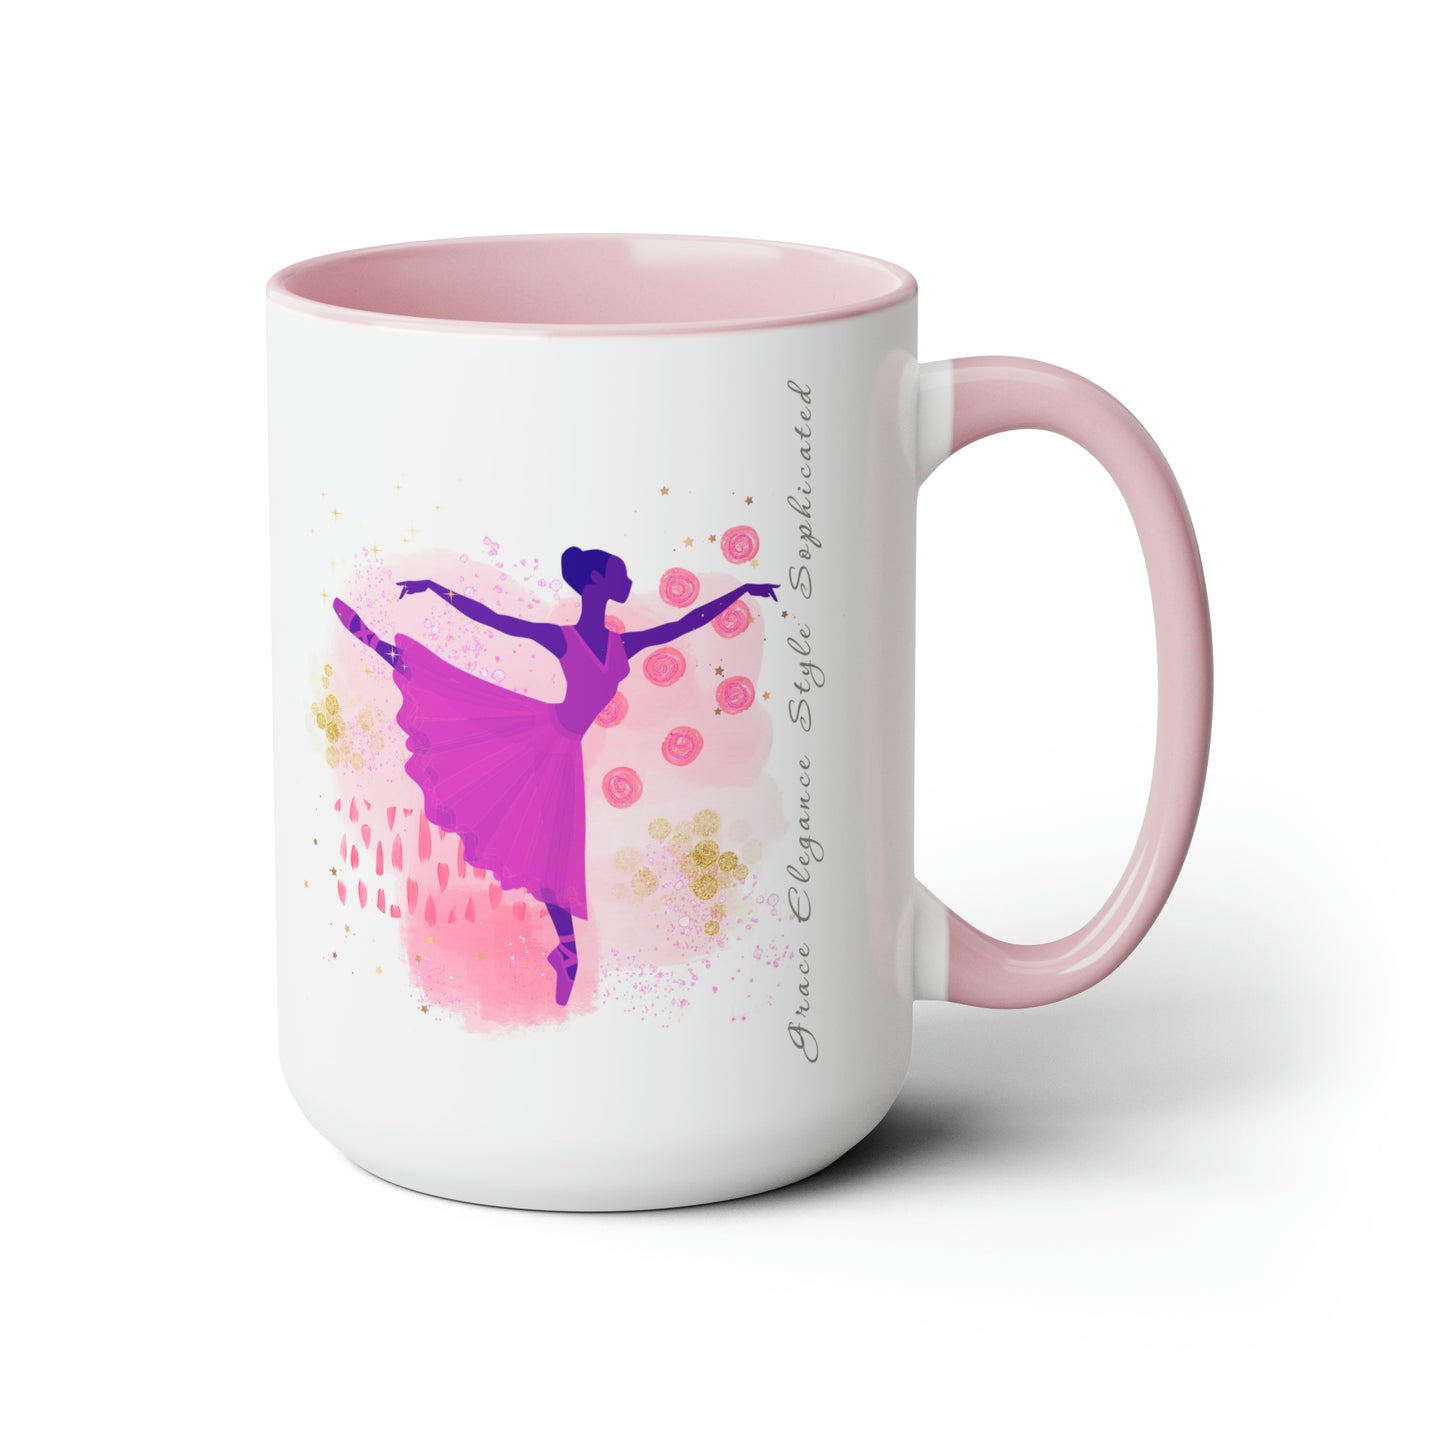 Two-Tone Coffee Mugs - Sophisticated Ballerina